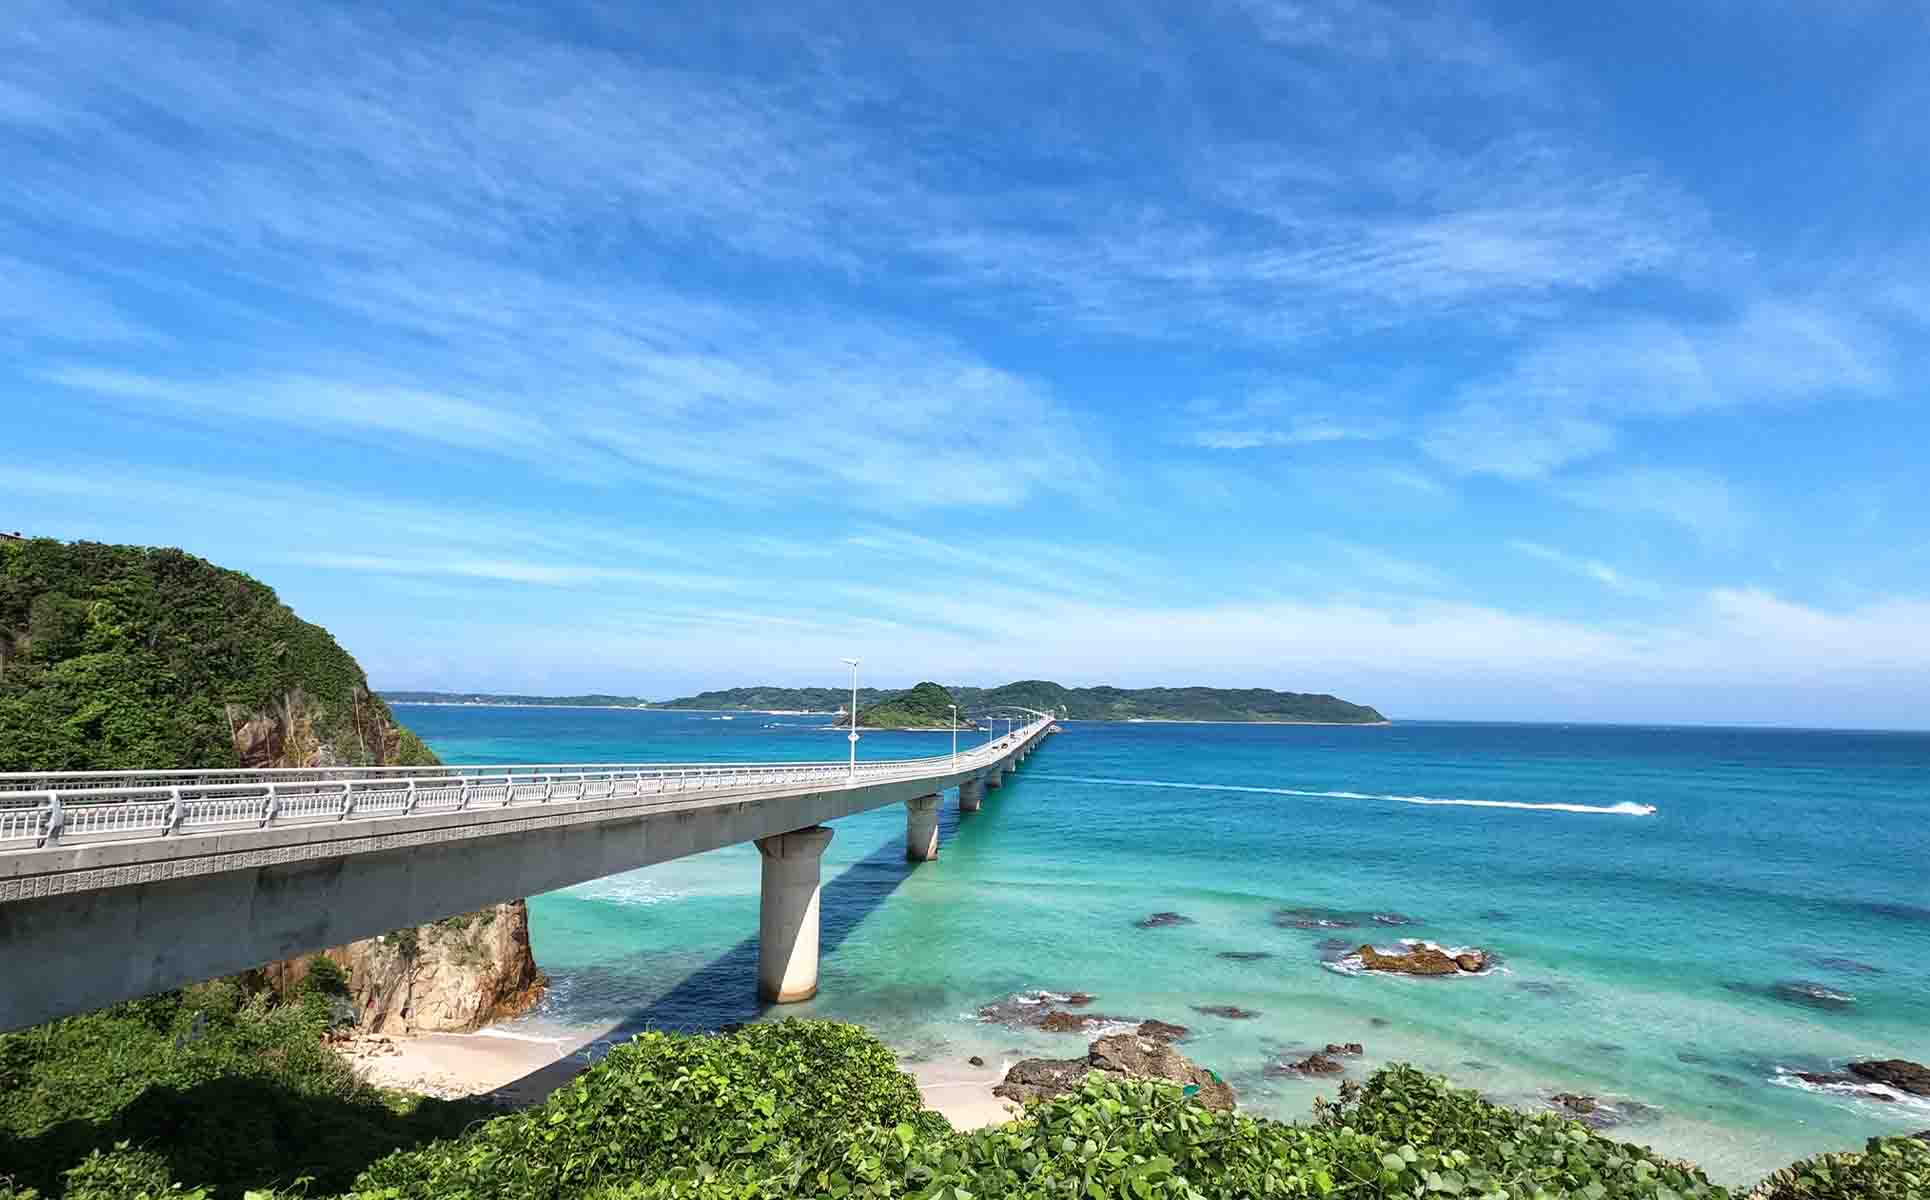 Tsunoshima Ride: Ride above the ocean to a beautiful island